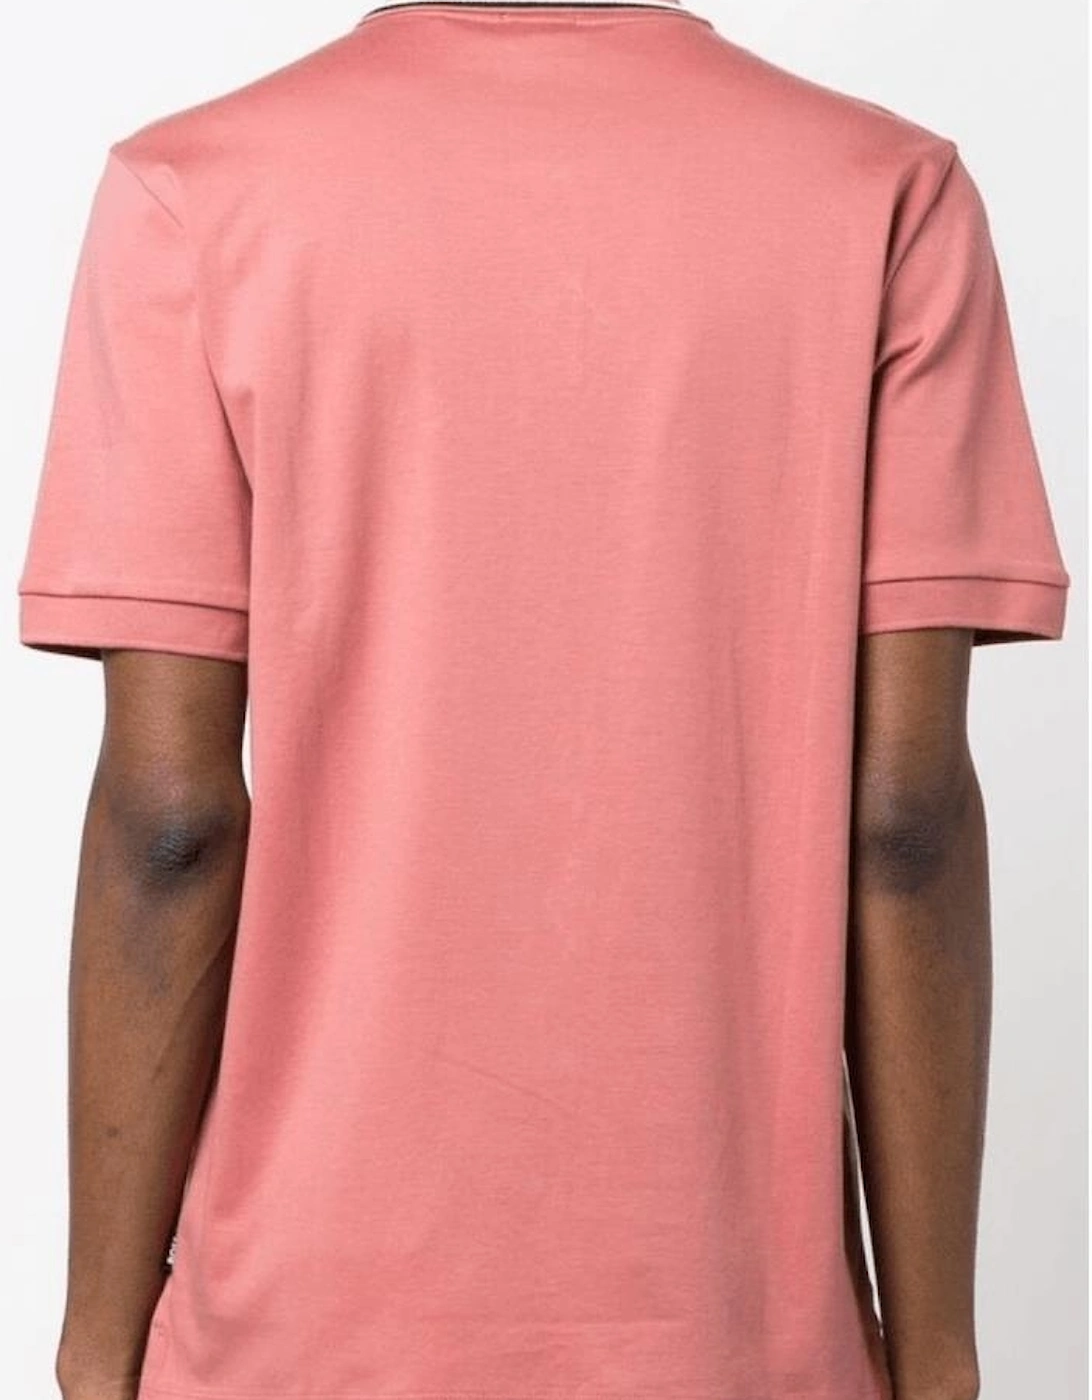 Penrose 38 Cotton Rubberised Logo Pink Polo Shirt